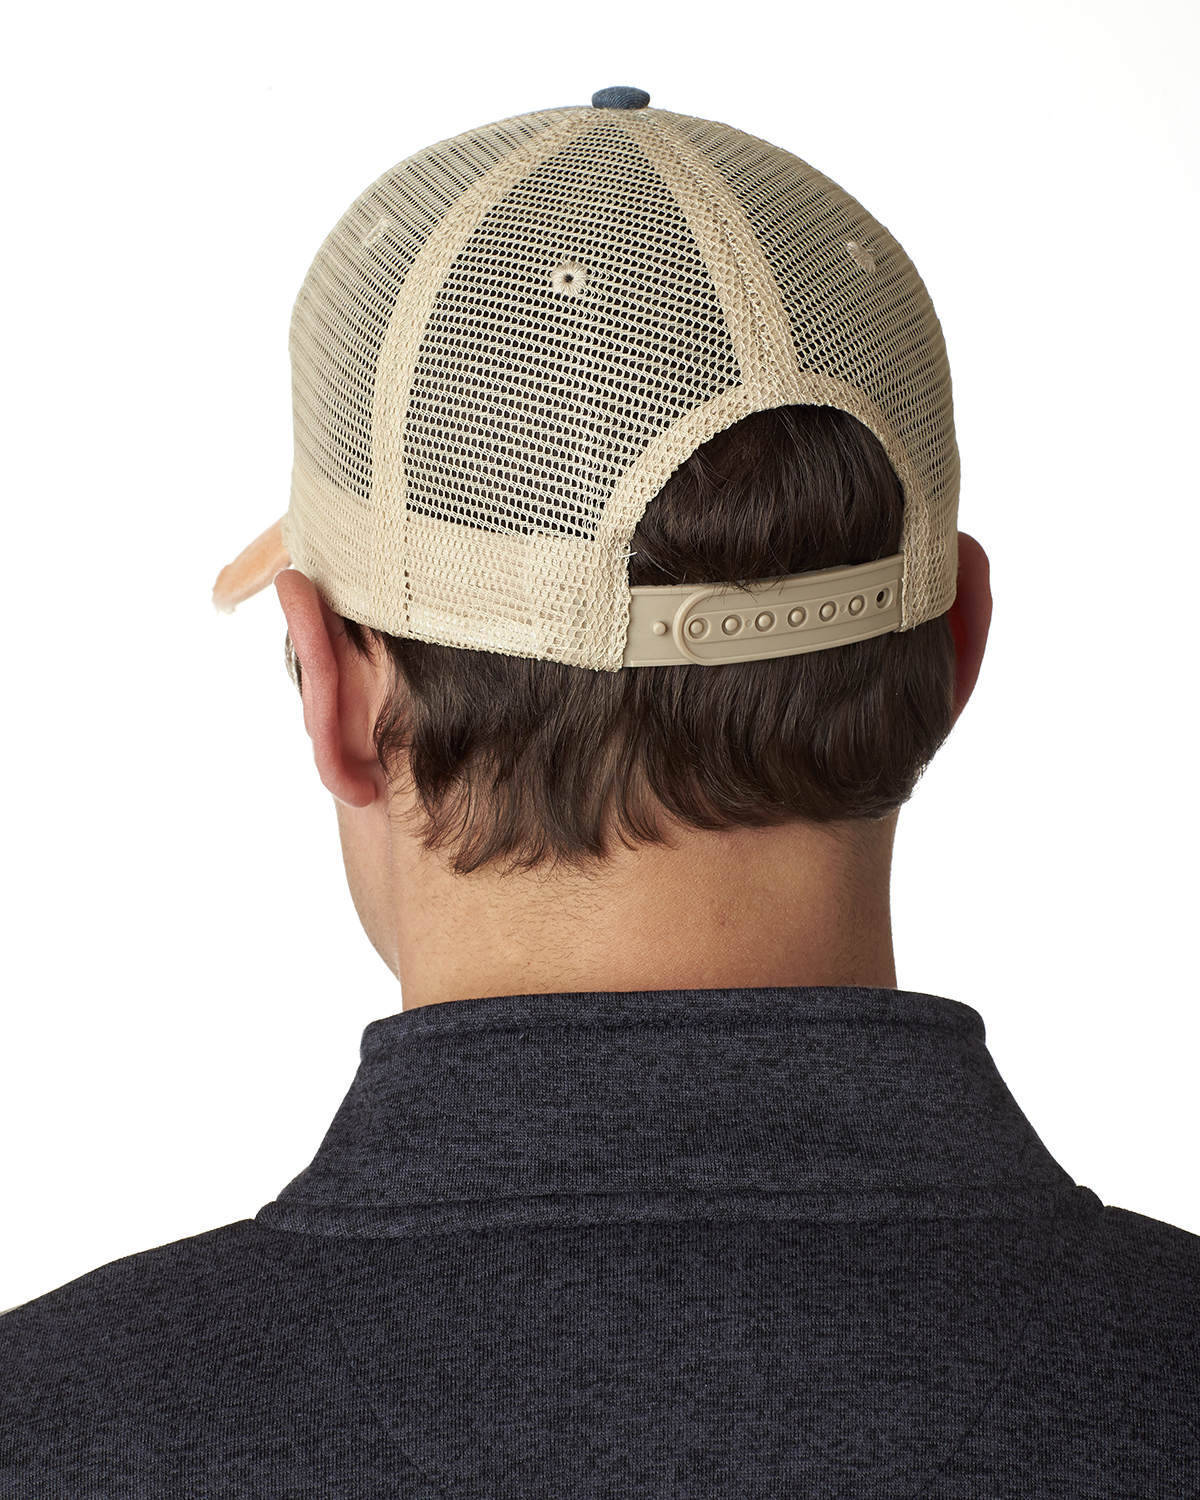 Nebraska Hat - Distressed Snapback Trucker Hat - Nebraska State Outline - Many Colors Available